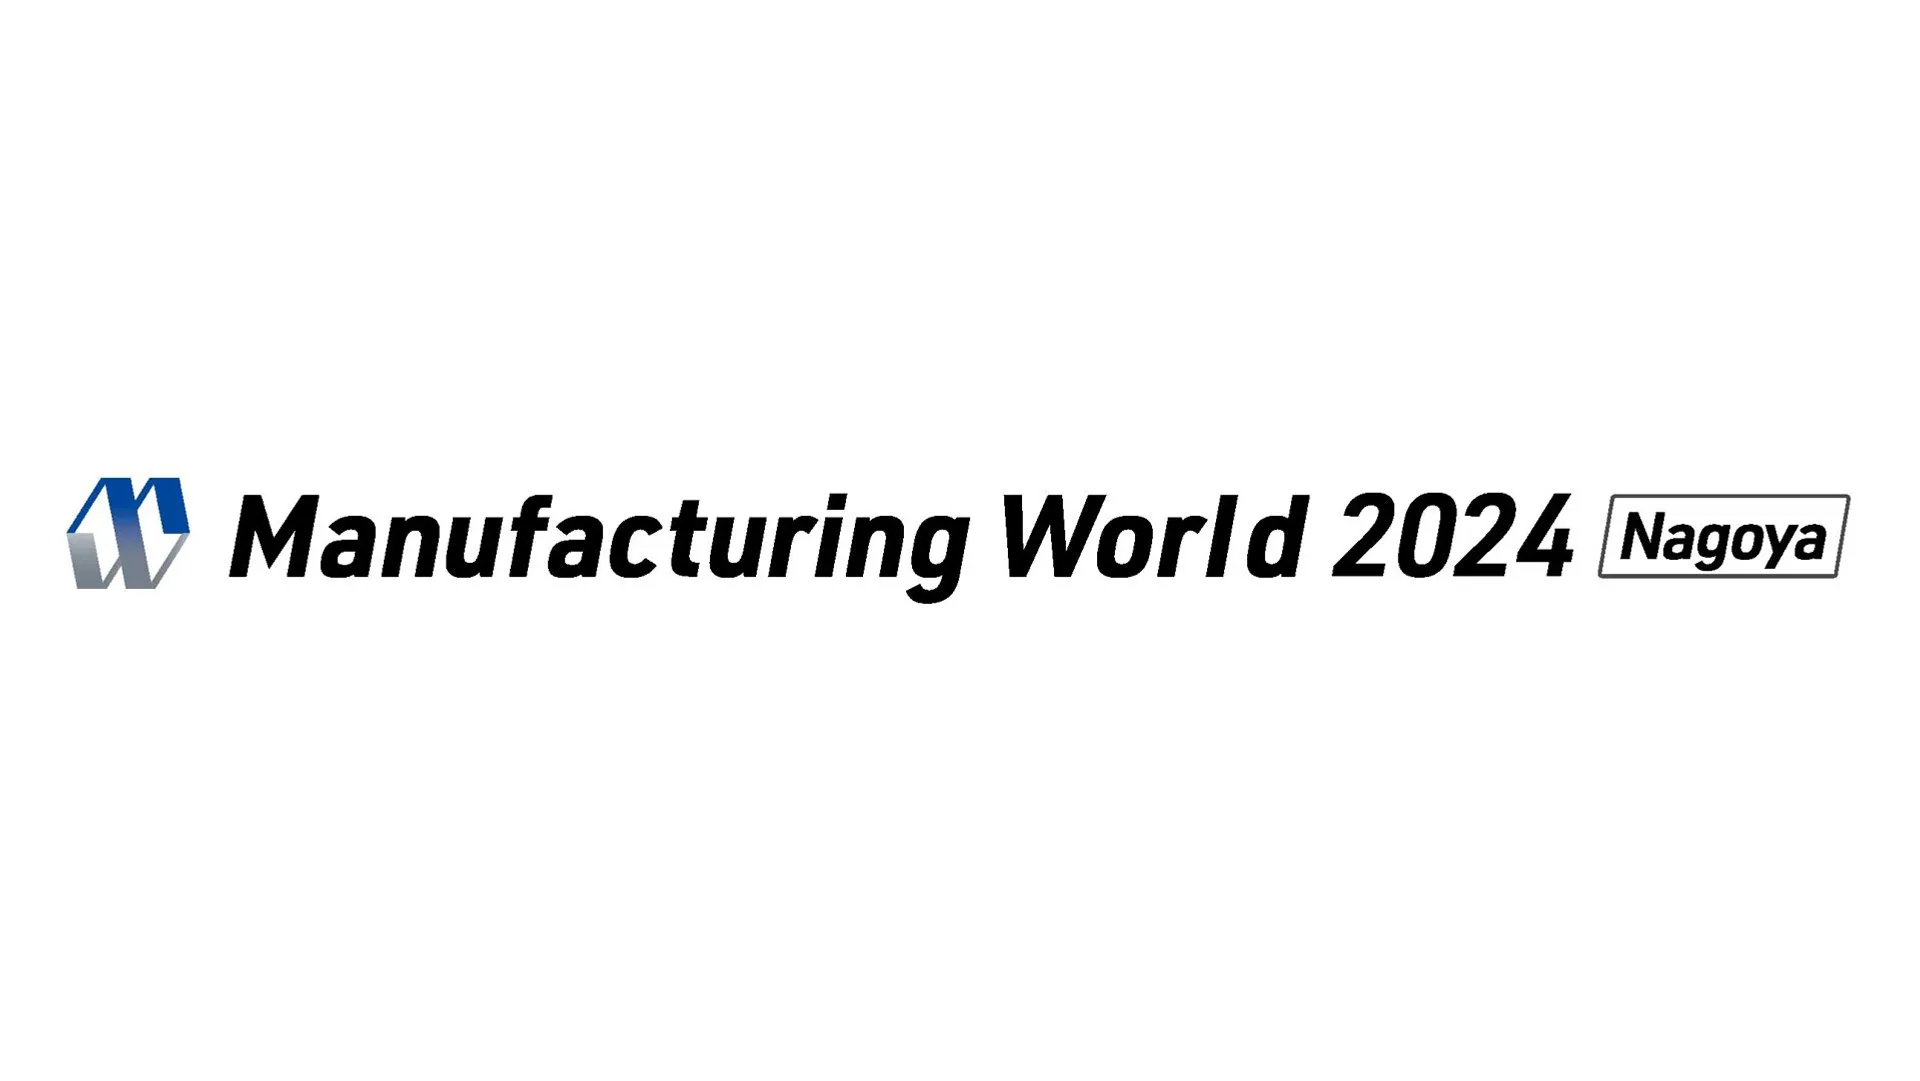 Mannufacturing World 2024 Nagoya - logo-shbmya.JPG